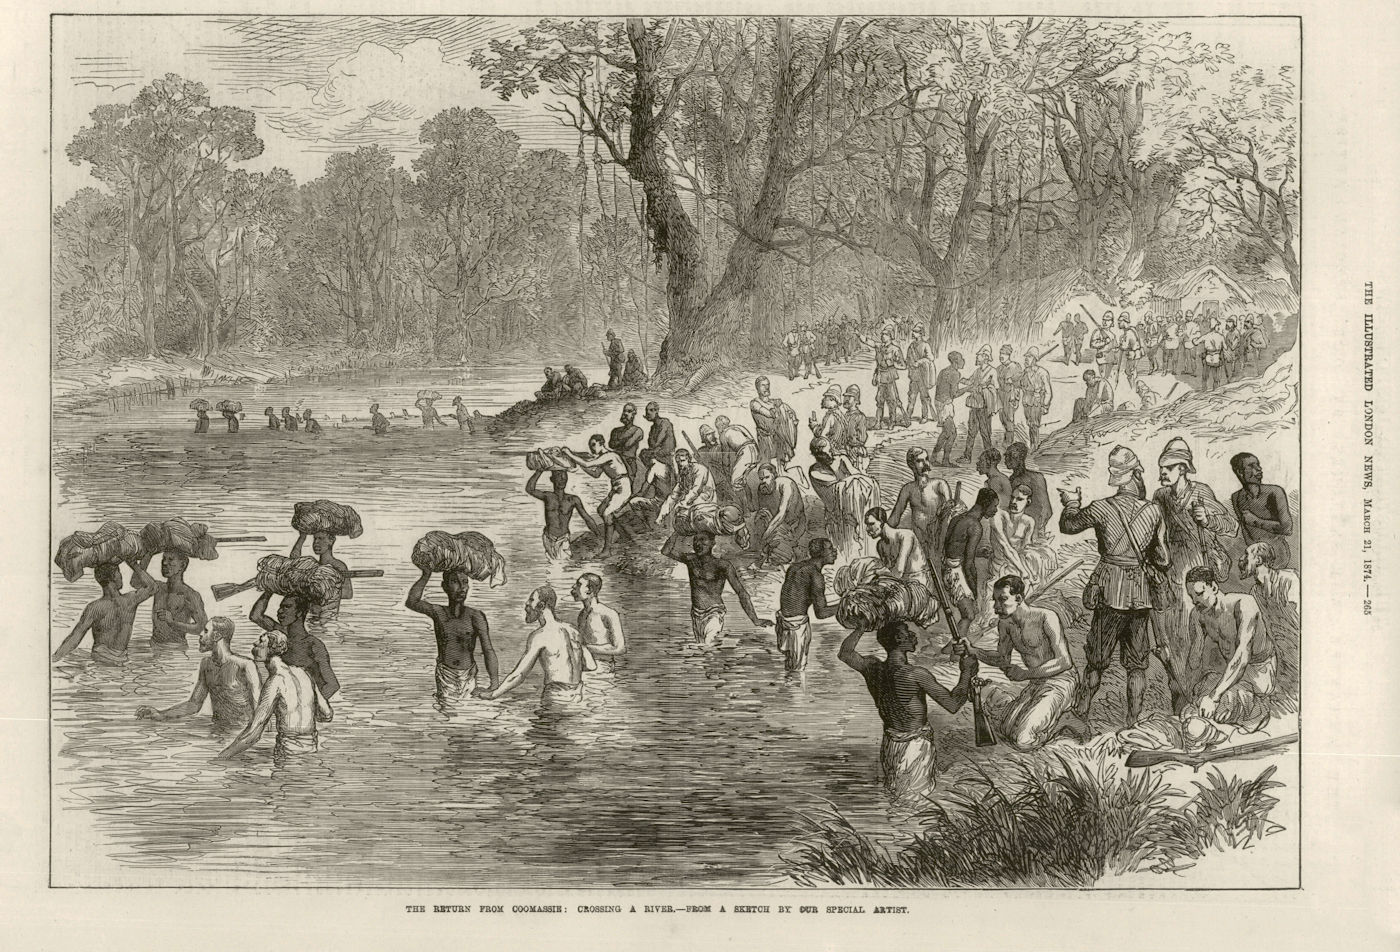 The Third Anglo-Ashanti War: Return from Kumasi: Crossing a river. Ghana 1874